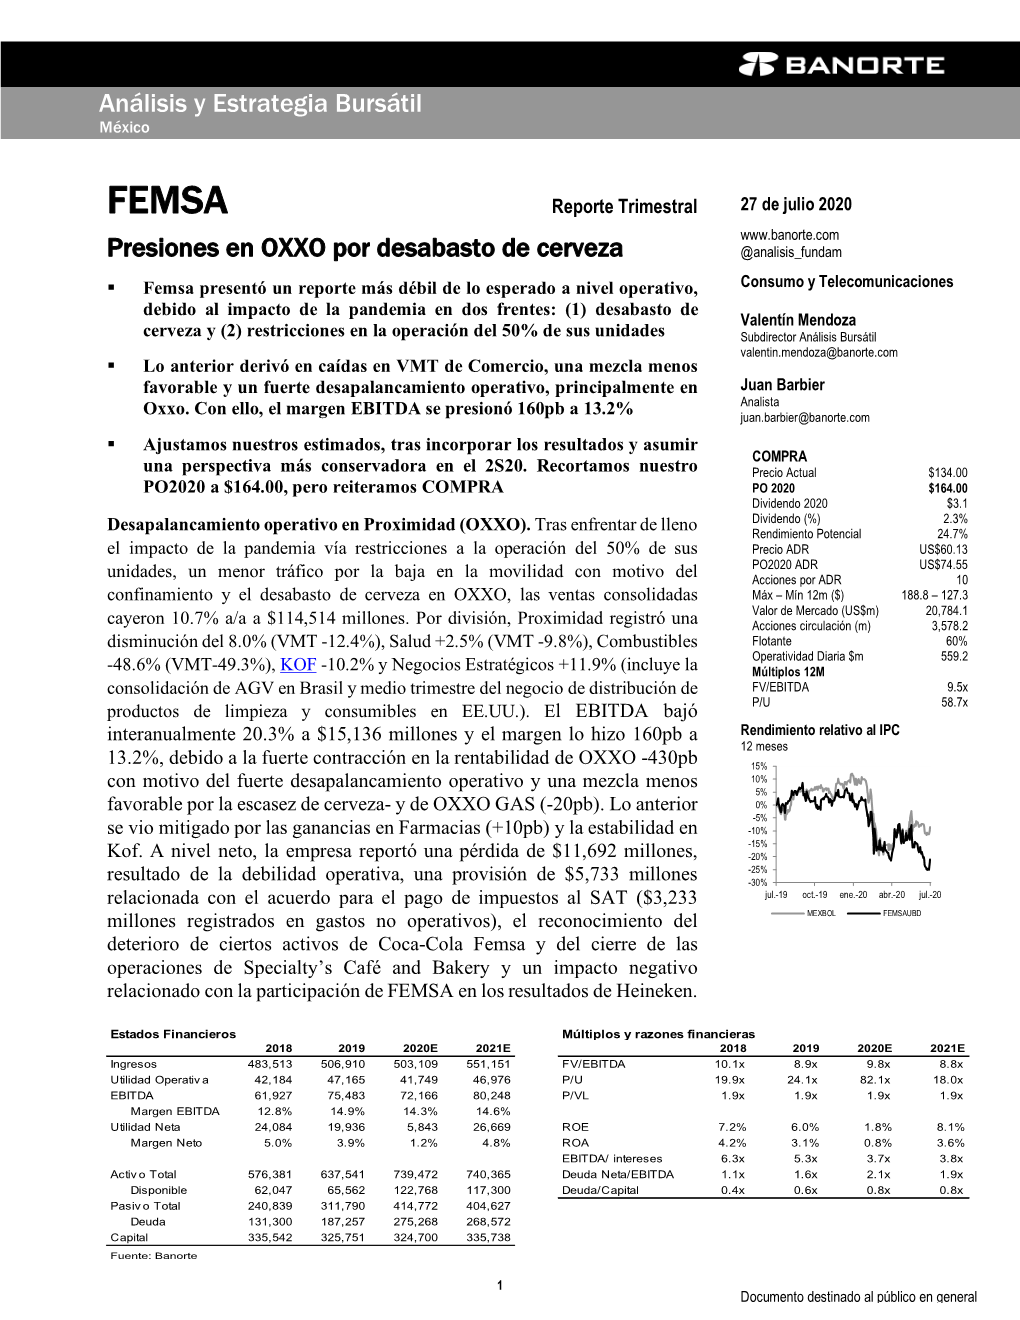 FEMSA Reporte Trimestral 27 De Julio 2020